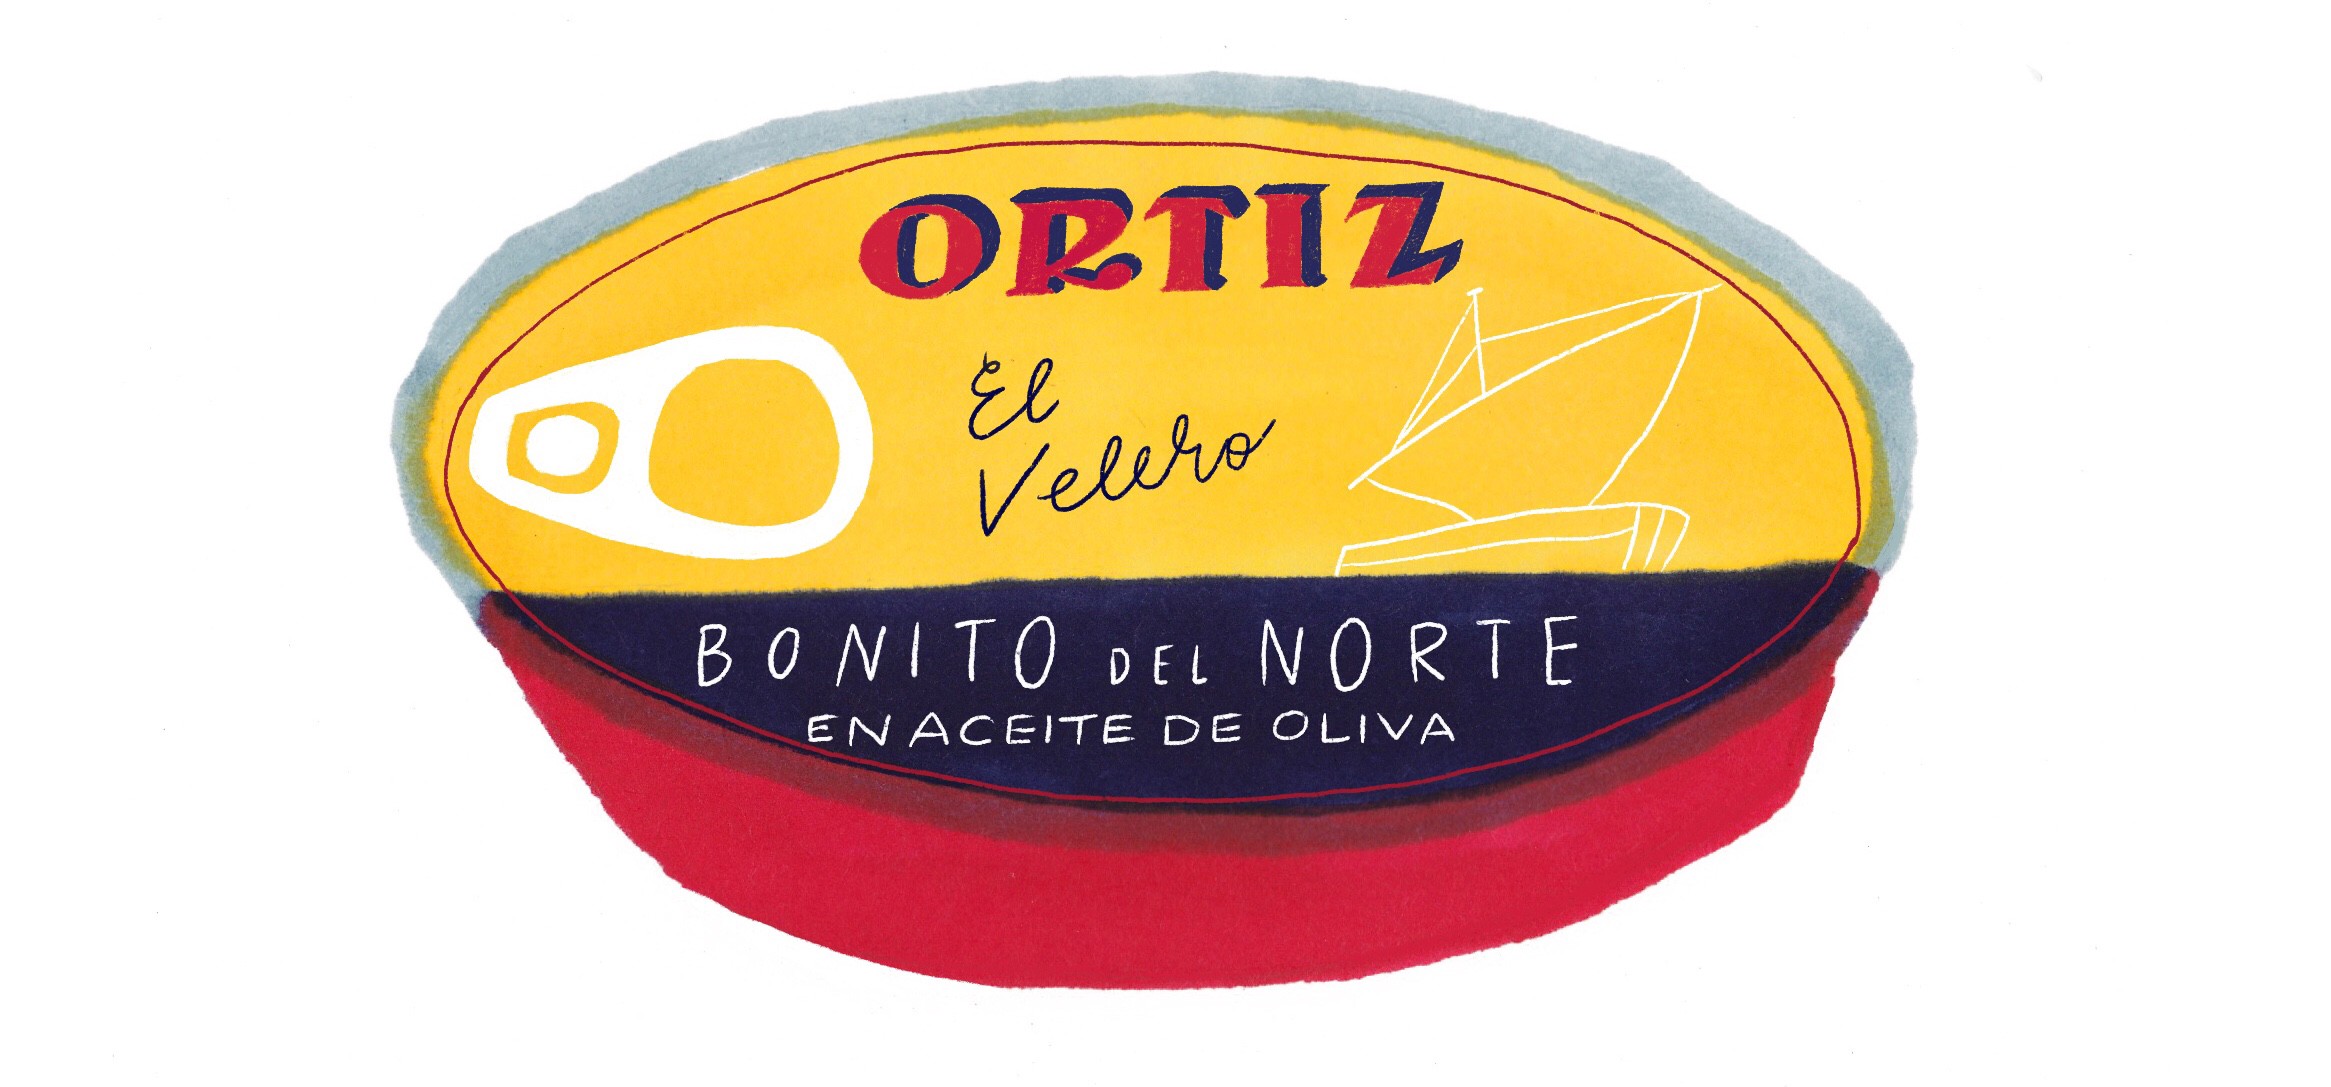 Illustration of an Ortiz can of tuna